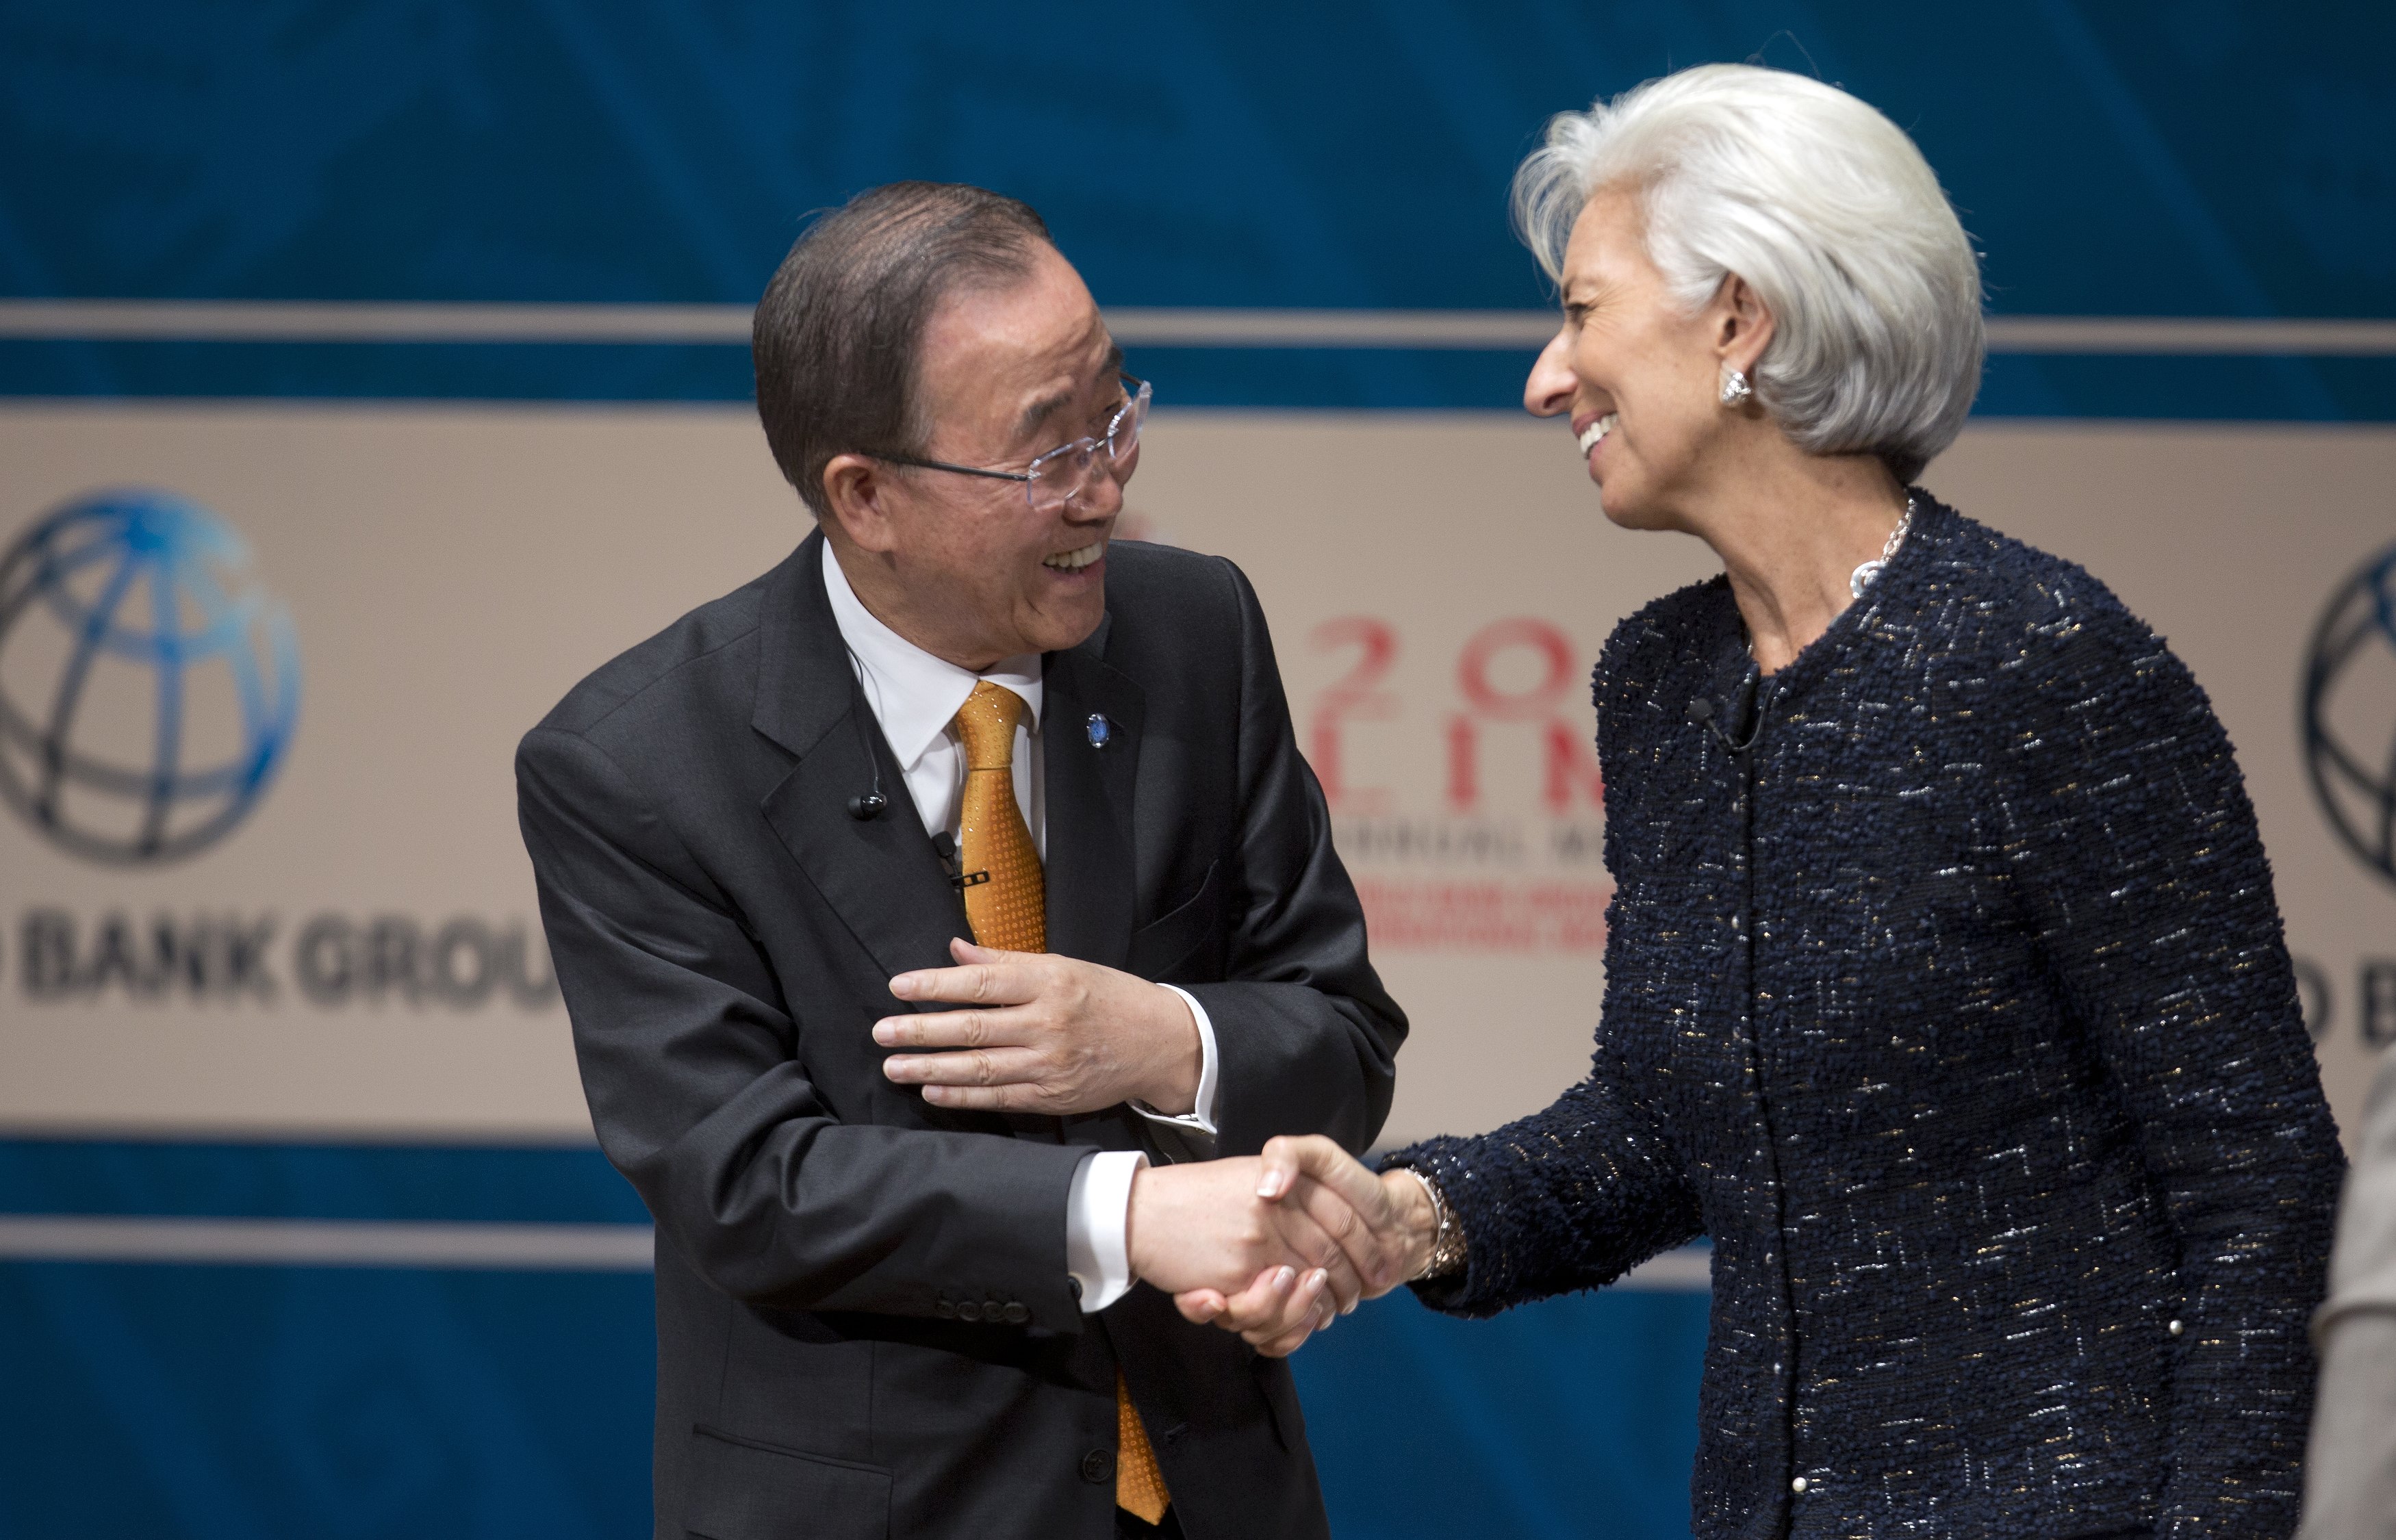 IMF managing director Christine Lagarde shakes hands with UN secretary general Ban Ki-moon in Lima. Photo: AP